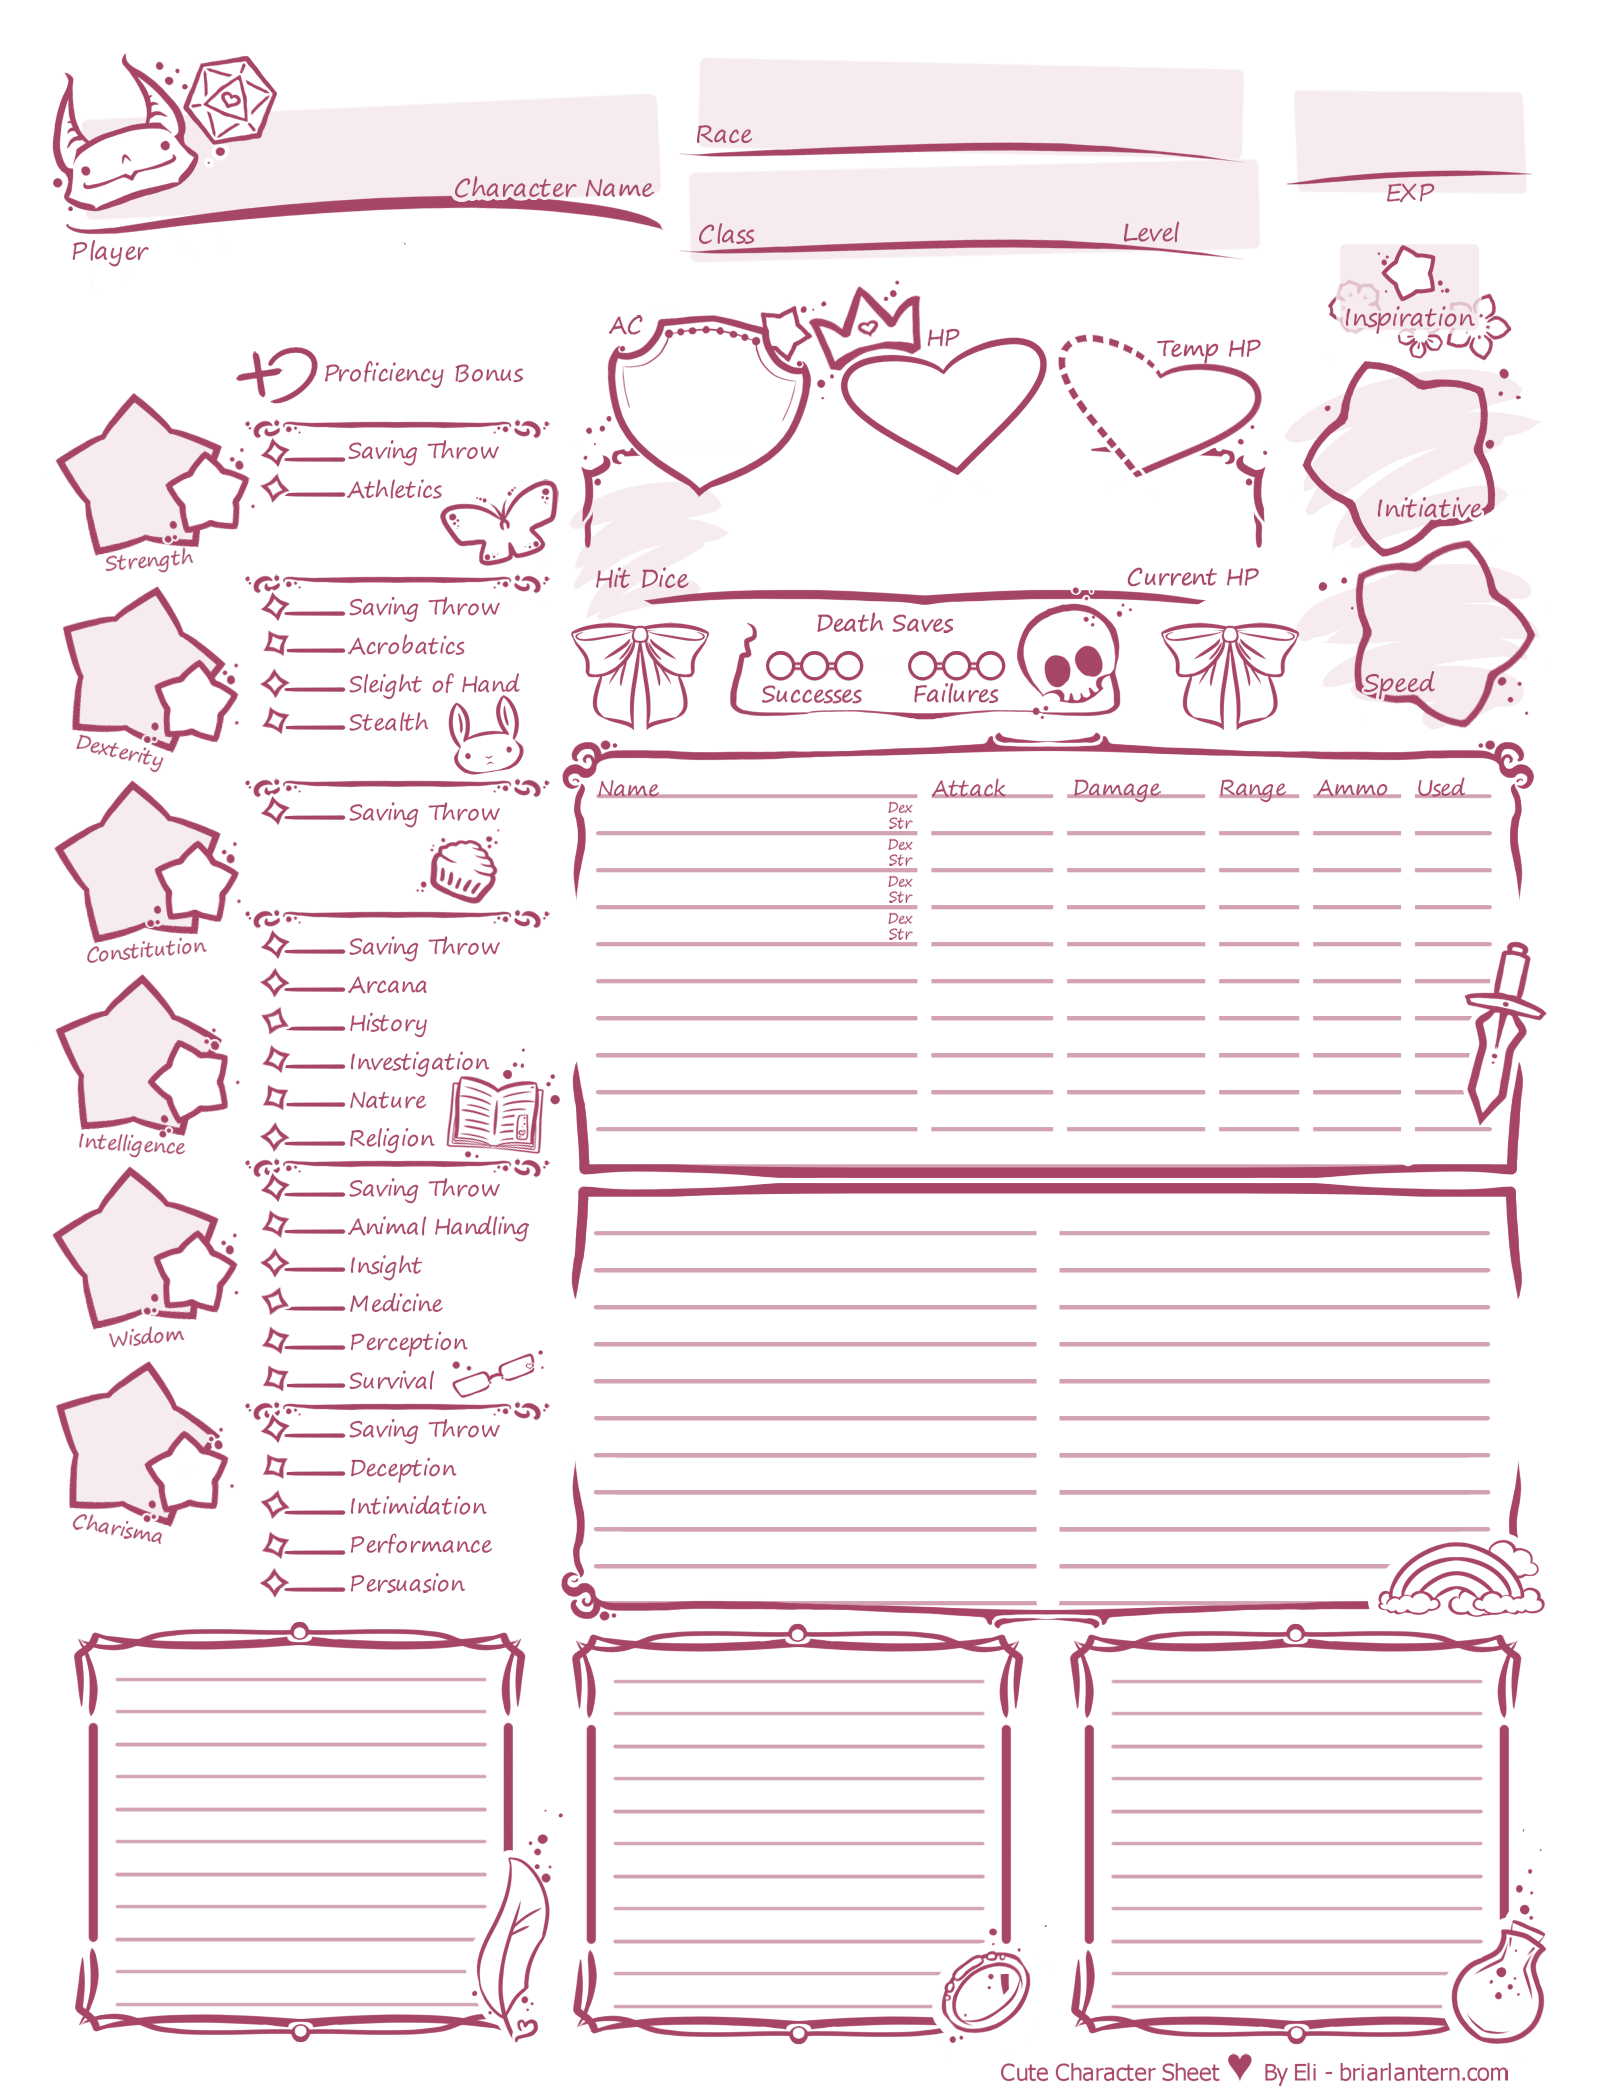 Cute Character Sheet 5th Edition